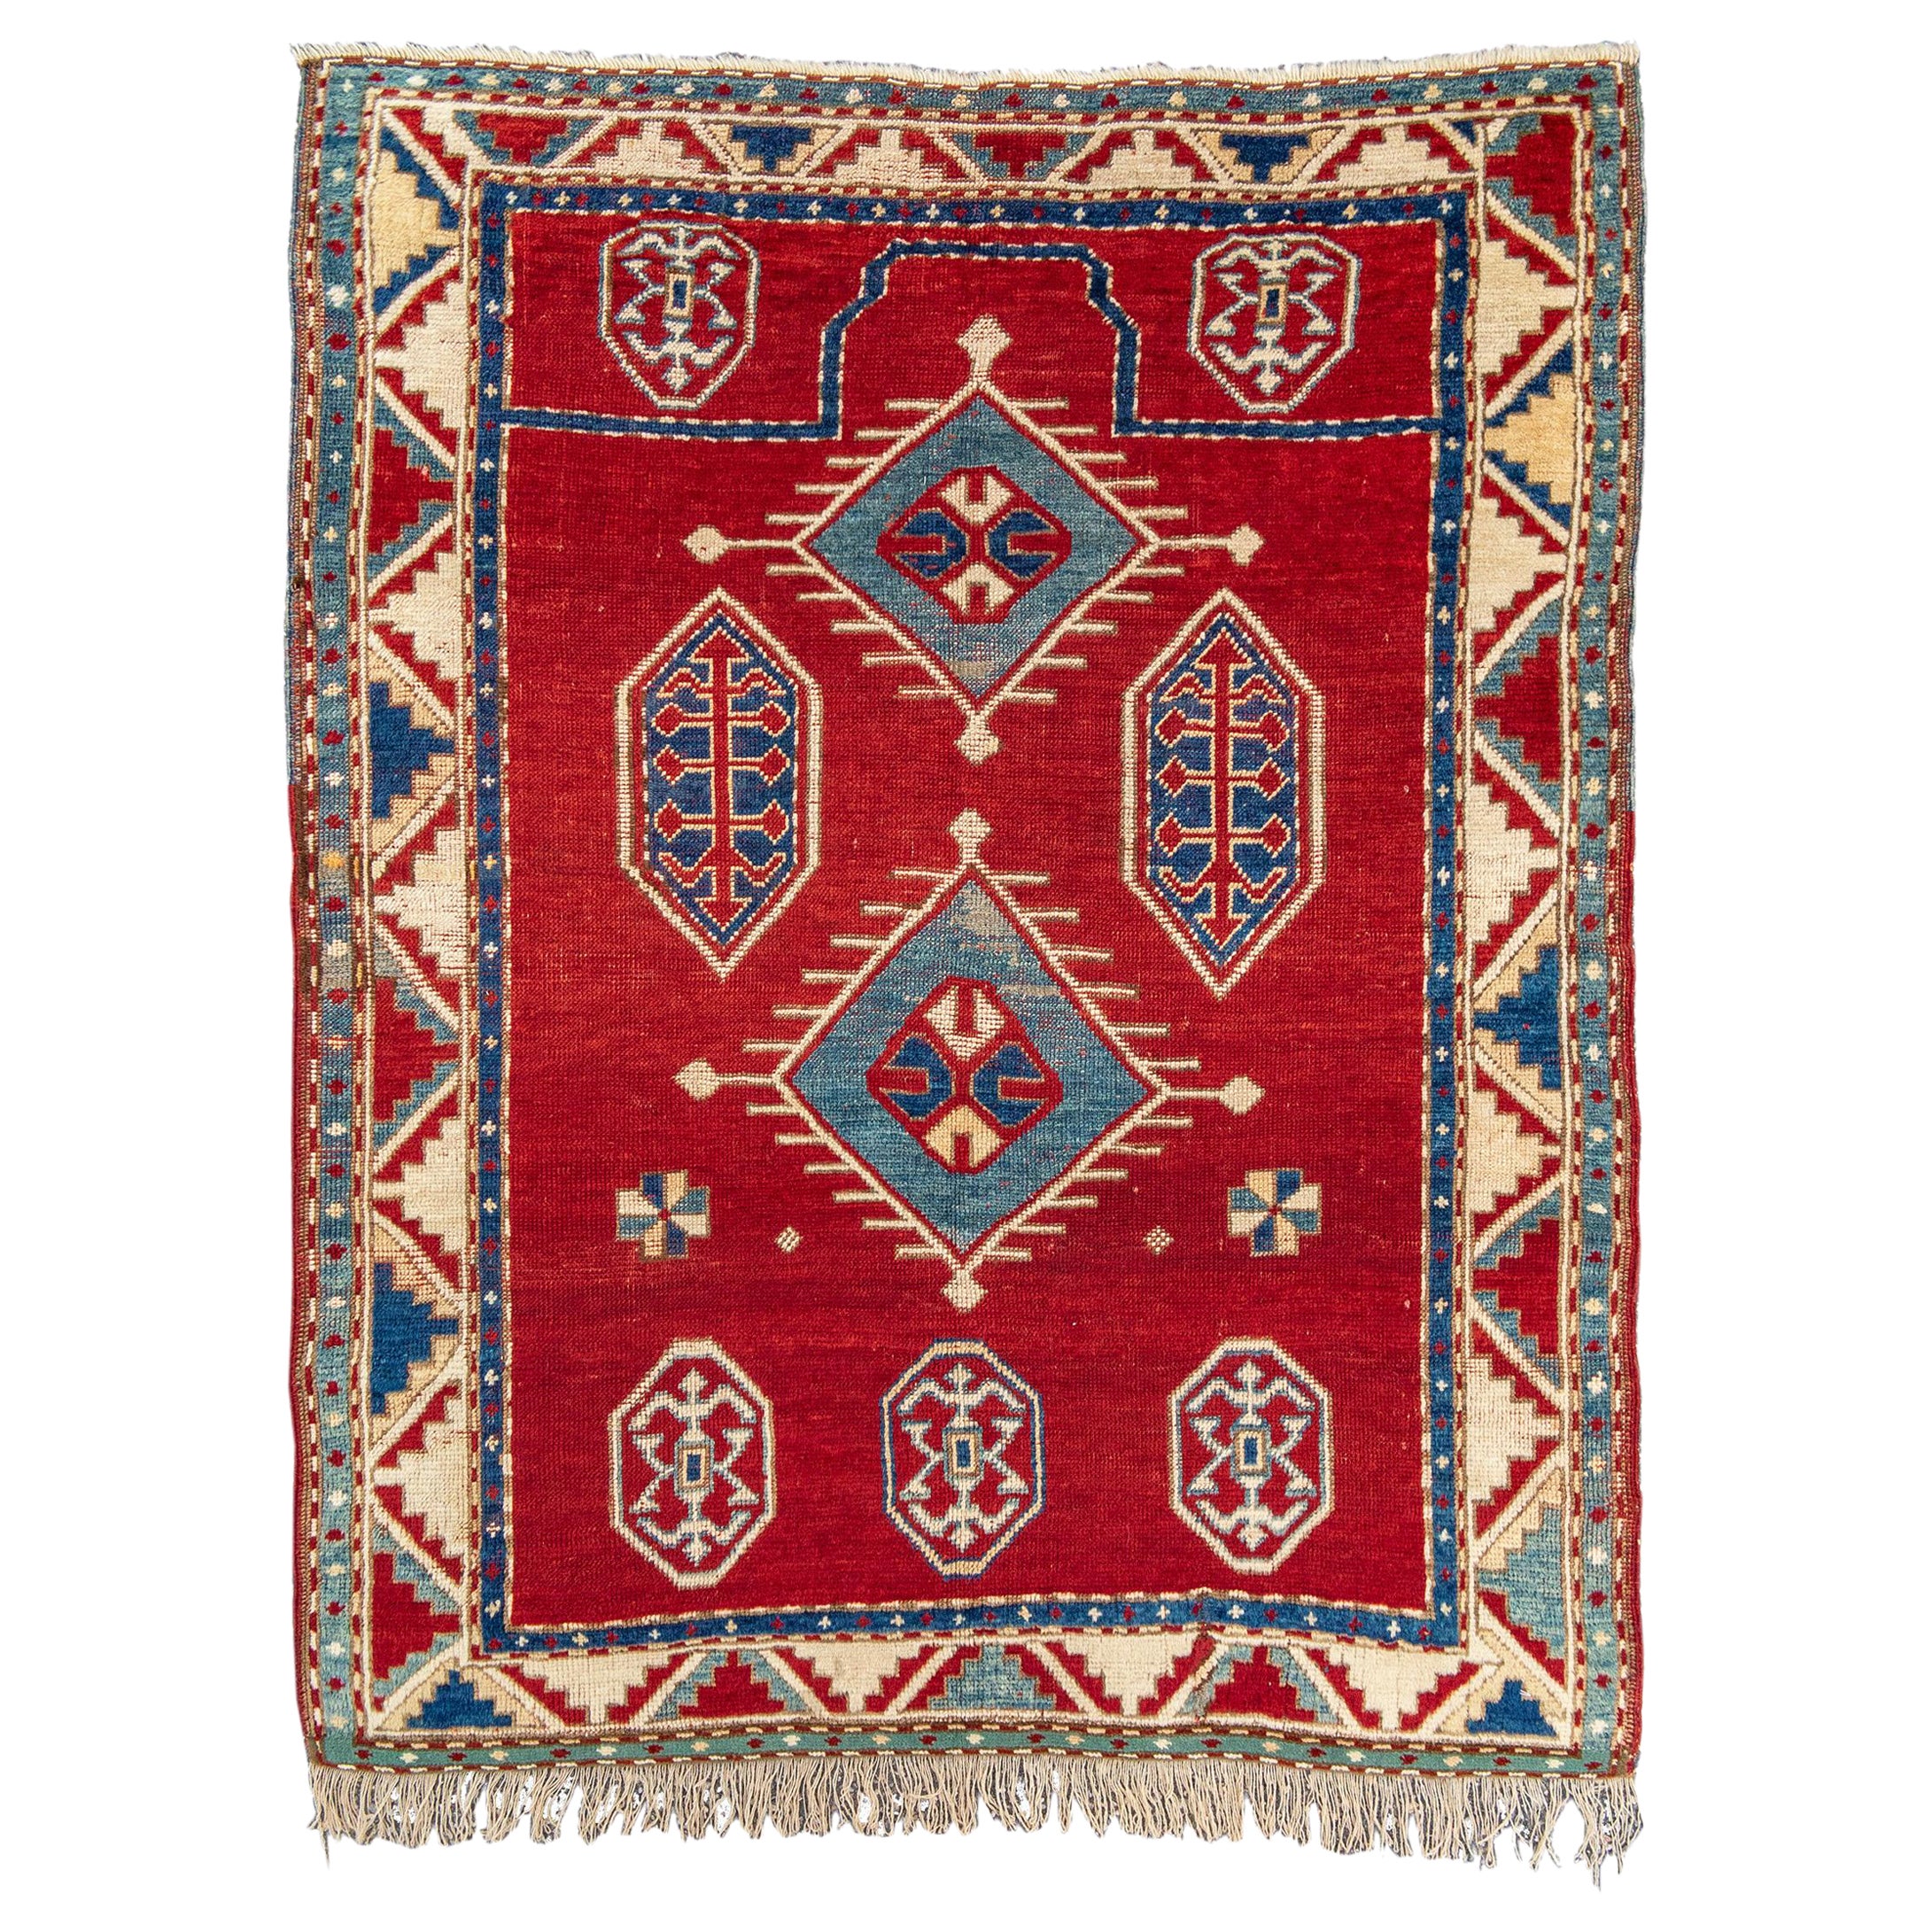 Antique Kazak Prayer Rug, 19th Century